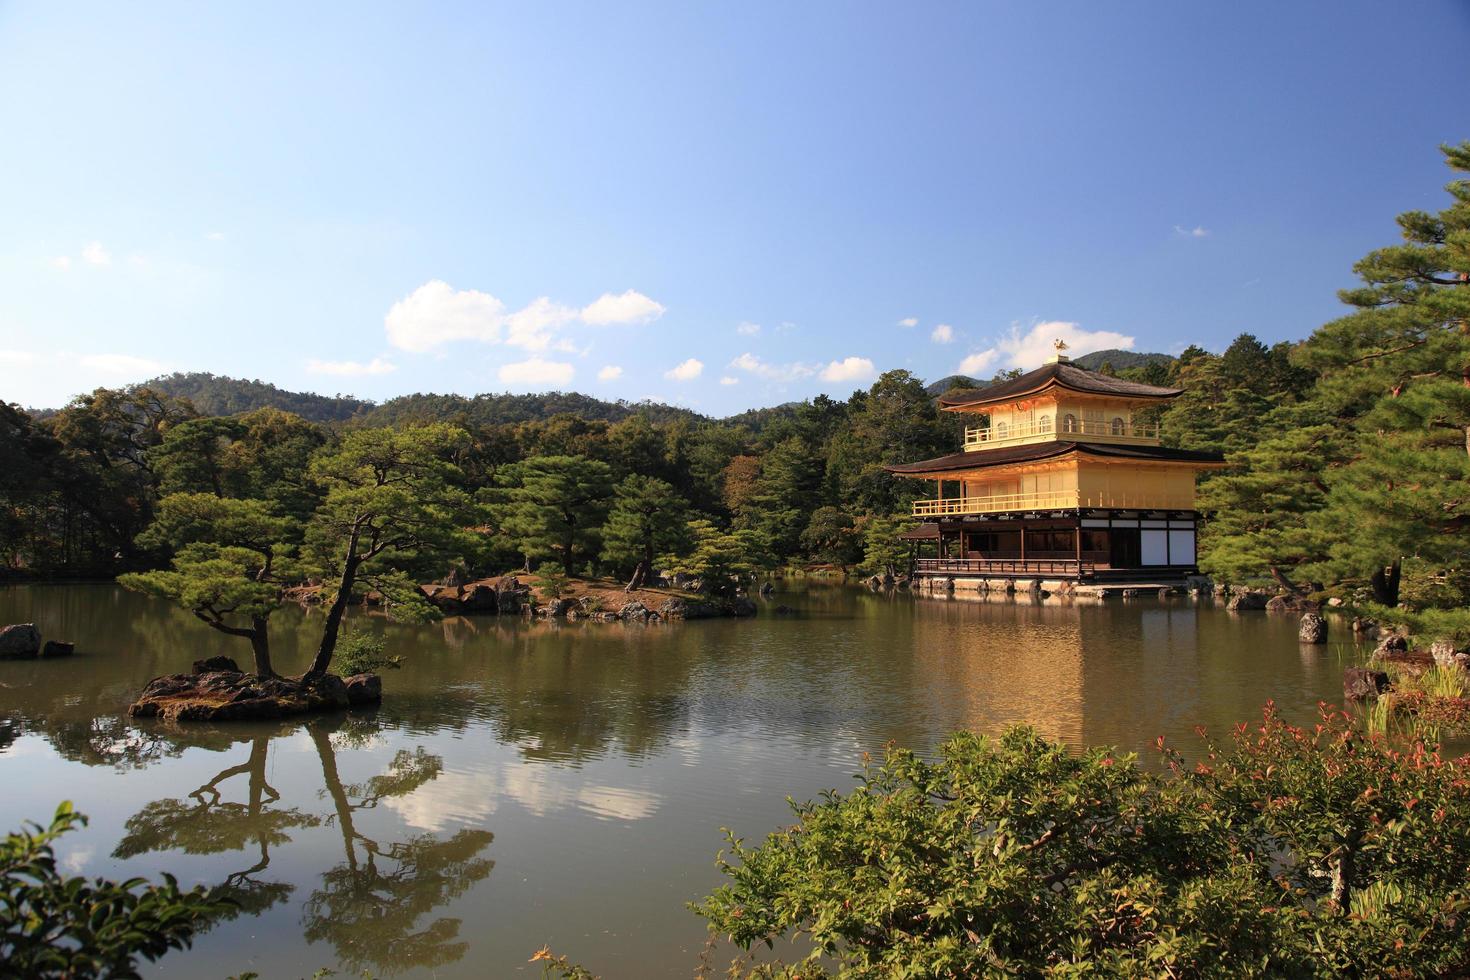 kinkakuji-tempel - gouden paviljoen in Kyoto Japan foto